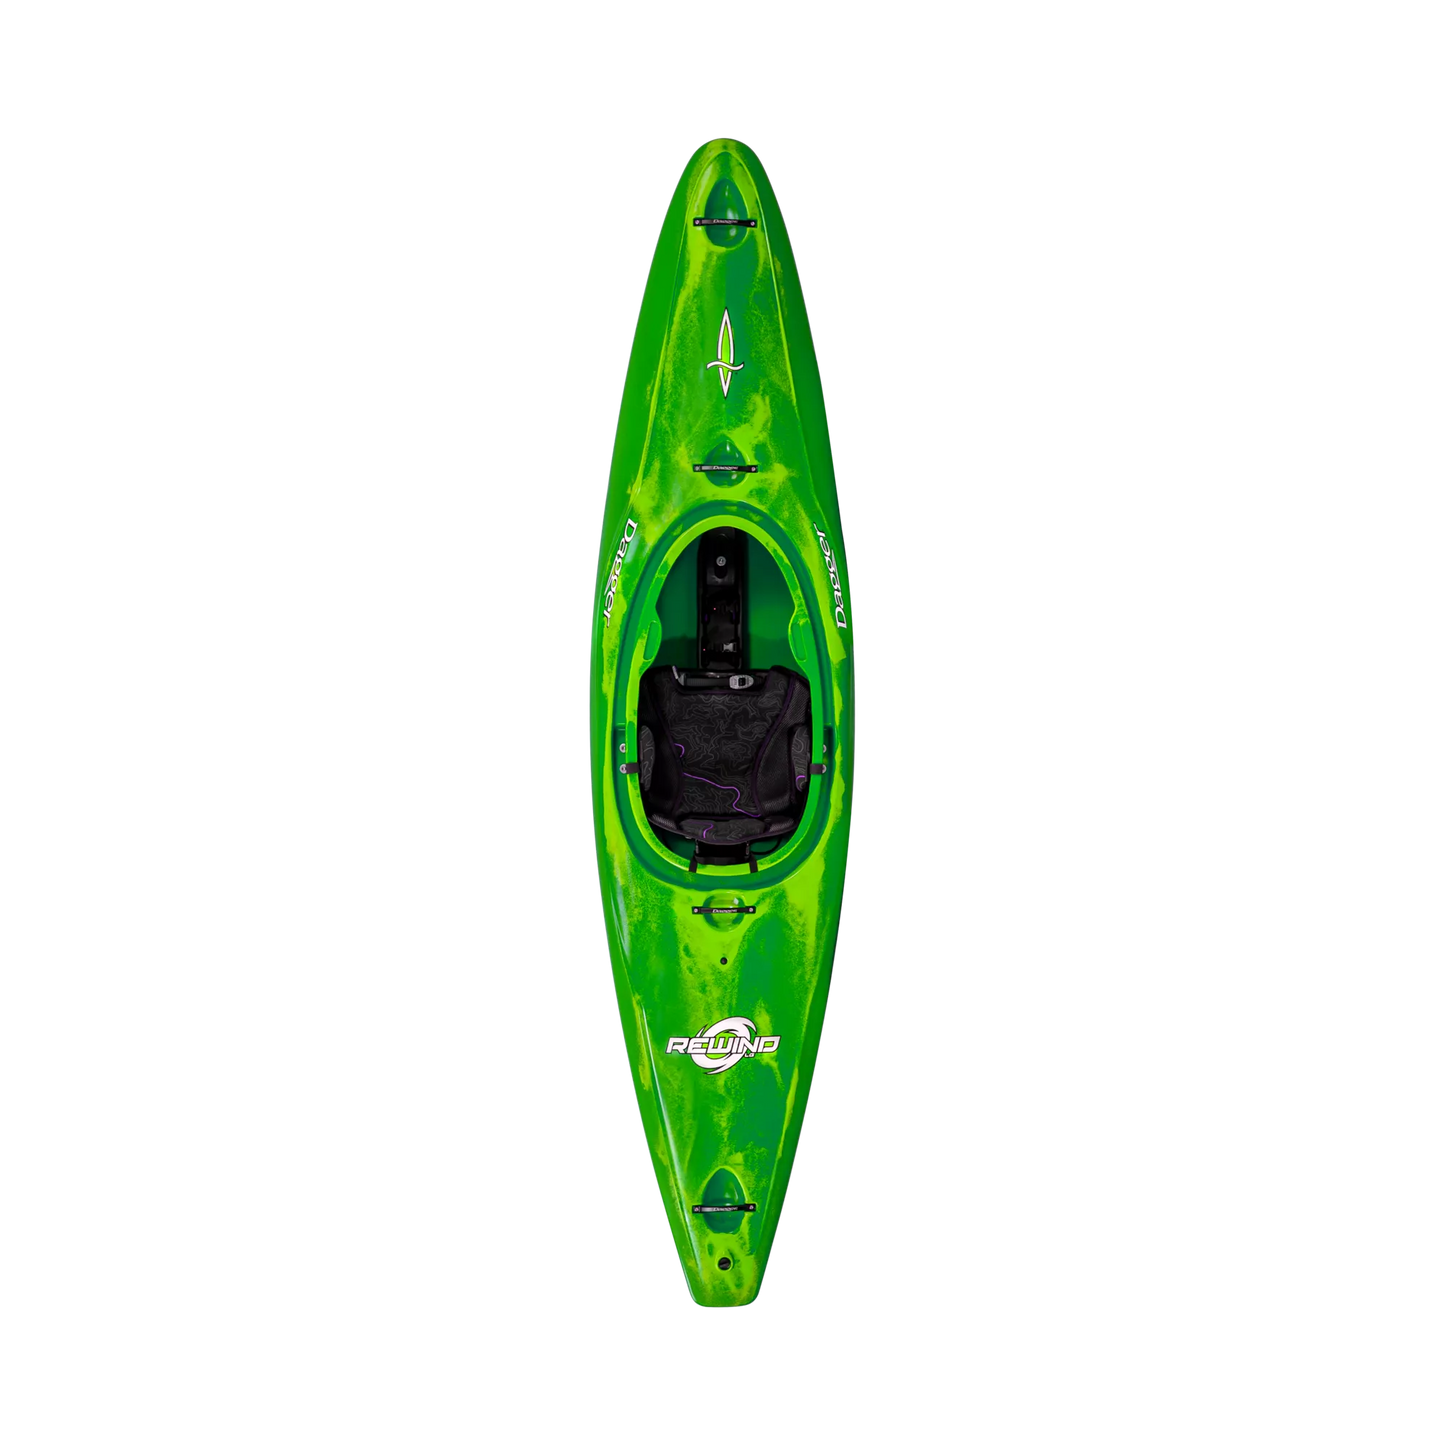 A green Dagger Rewind whitewater kayak on a black background.